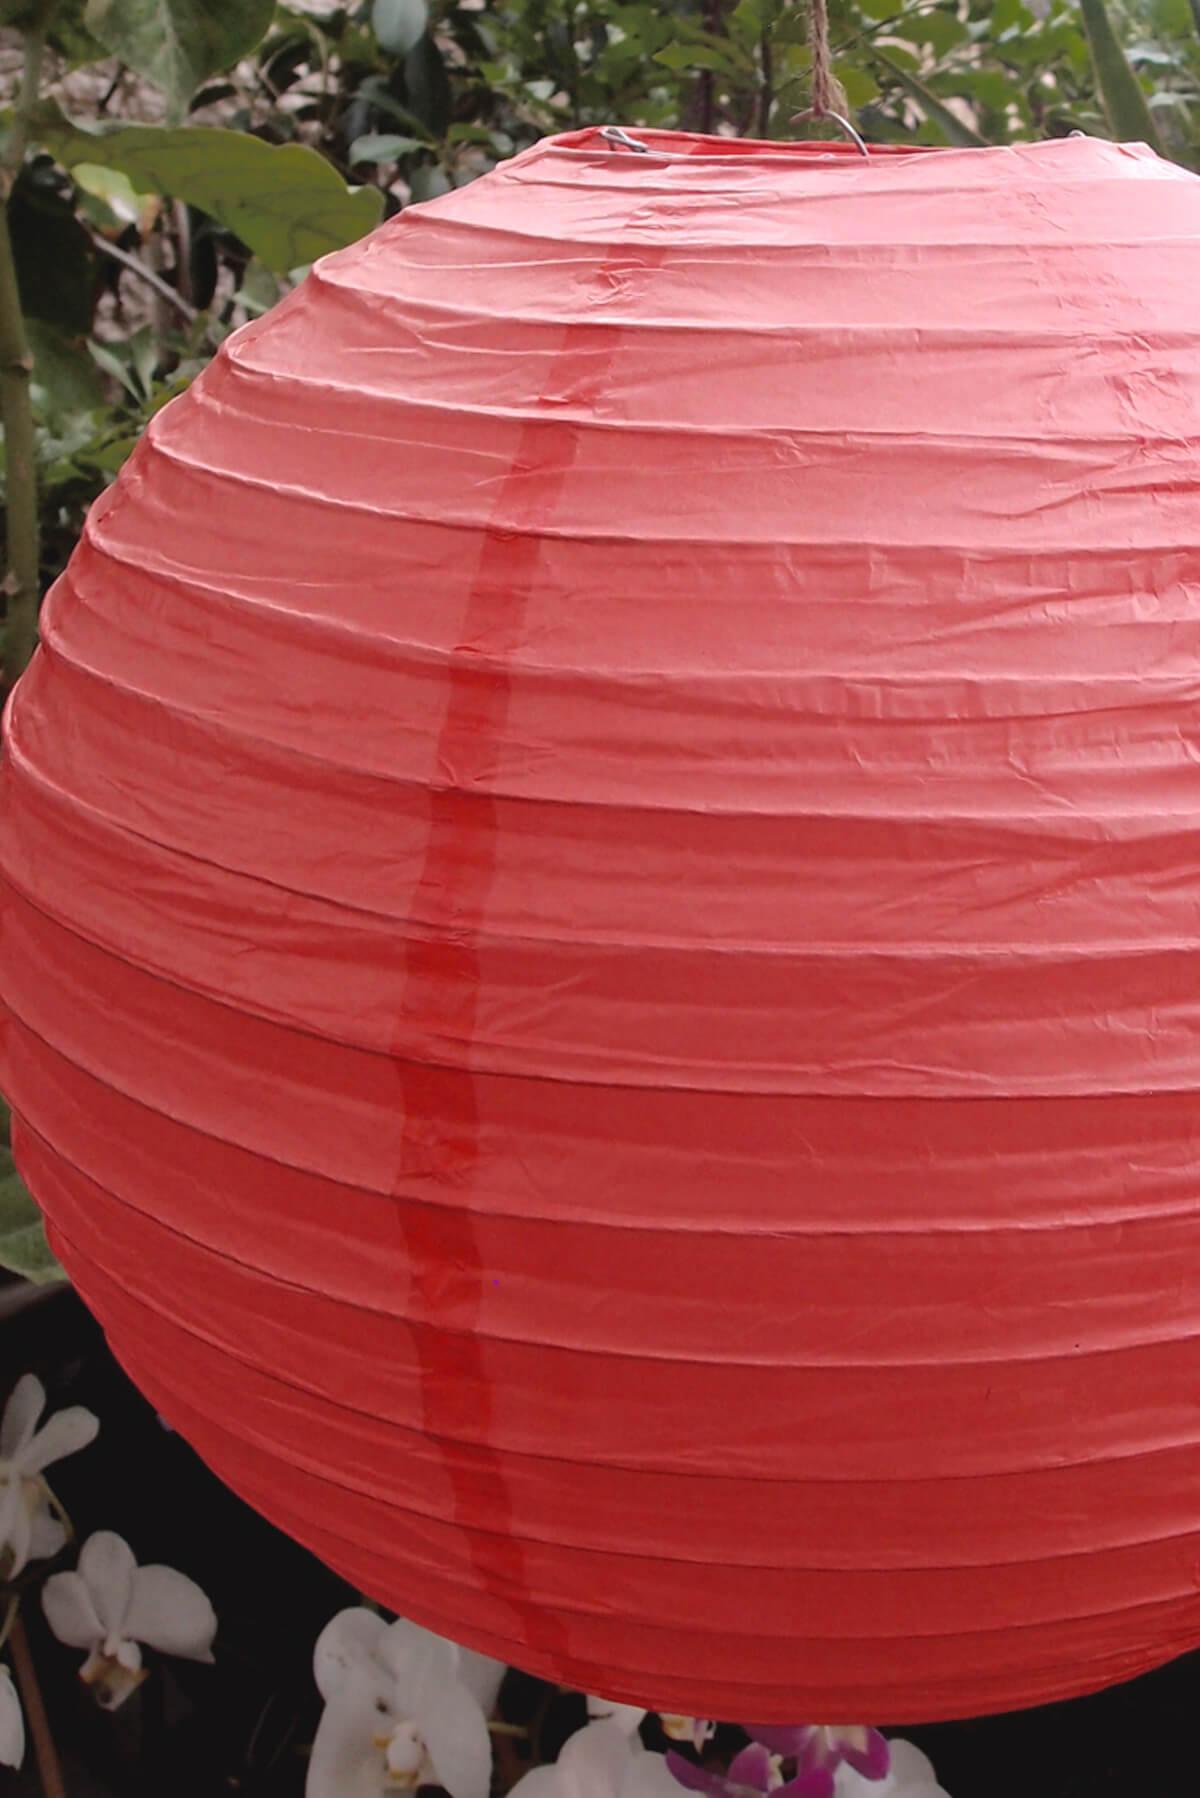 BLOWOUT 4 Pack  Tissue Paper Tassel Set (Red, Pre-Folded EZ-Fold) -   - Paper Lanterns, Decor, Party Lights & More